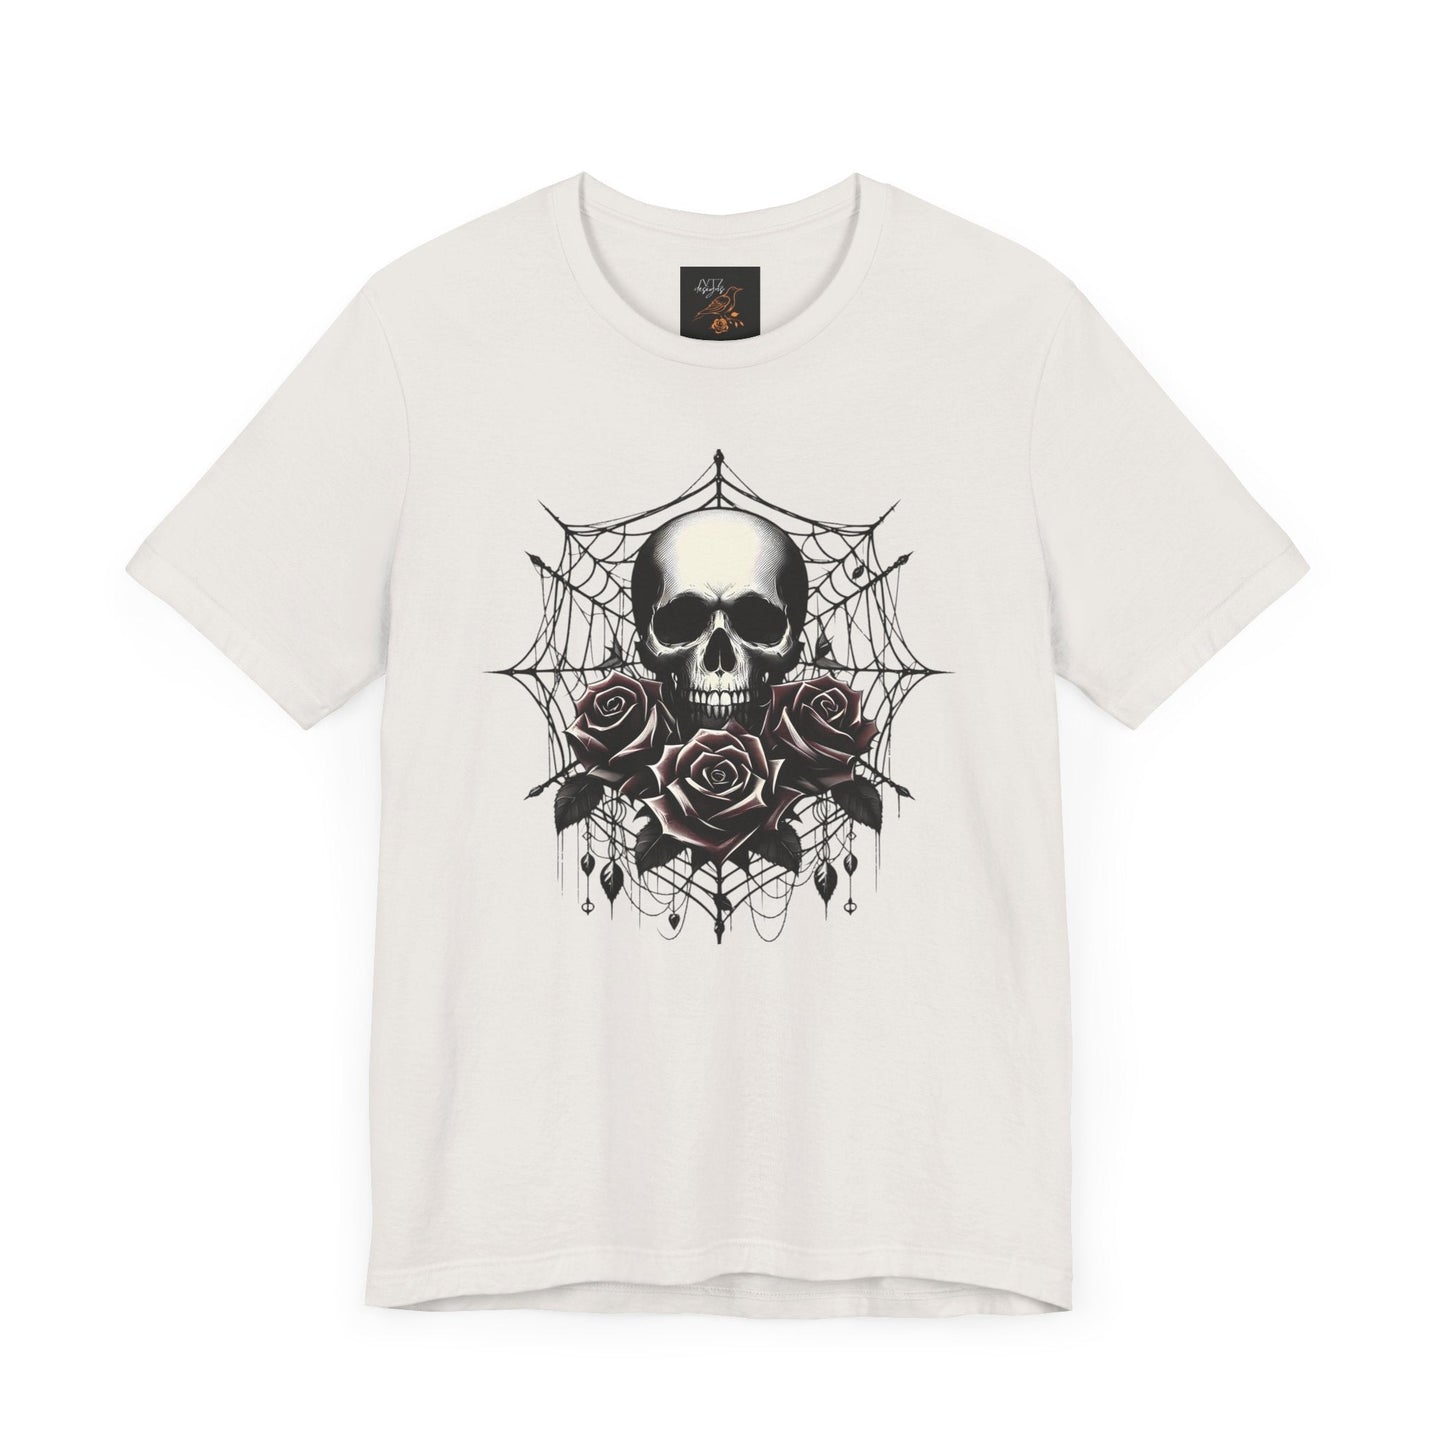 Skull Roses and Spiderweb Tee ShirtT - ShirtVTZdesignsVintage WhiteXSclothesclothingCotton